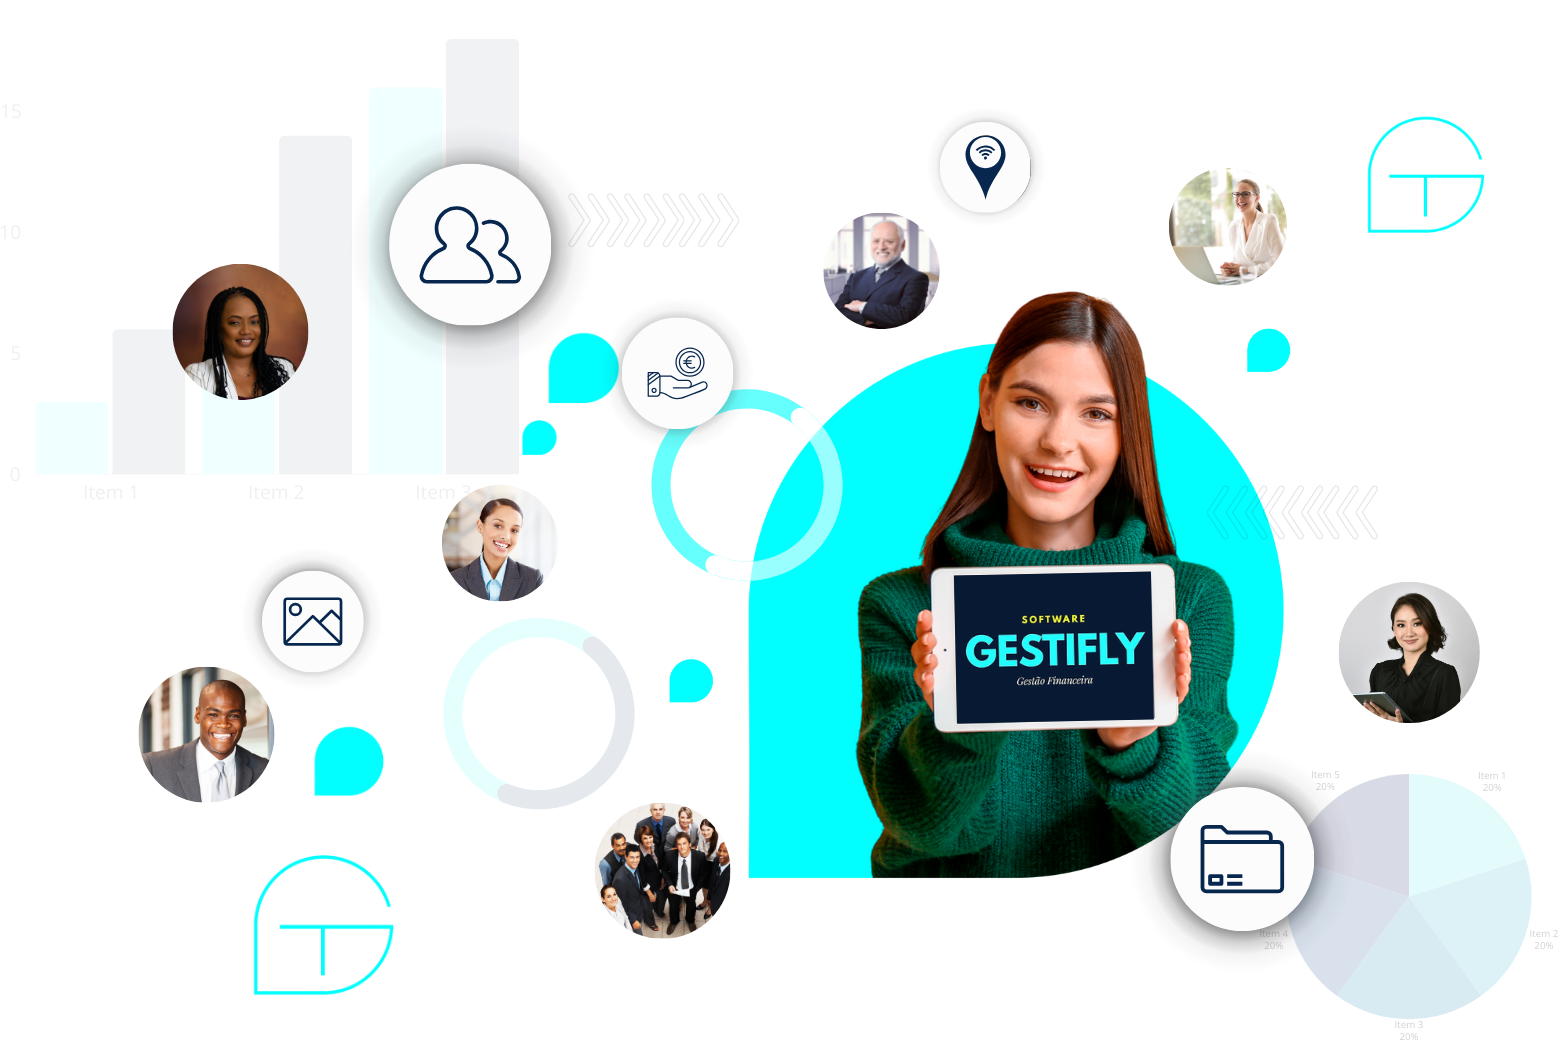 GESTIFLY - Software de Gestão Empresarial. Simples, rápido e eficiente para sua empresa!